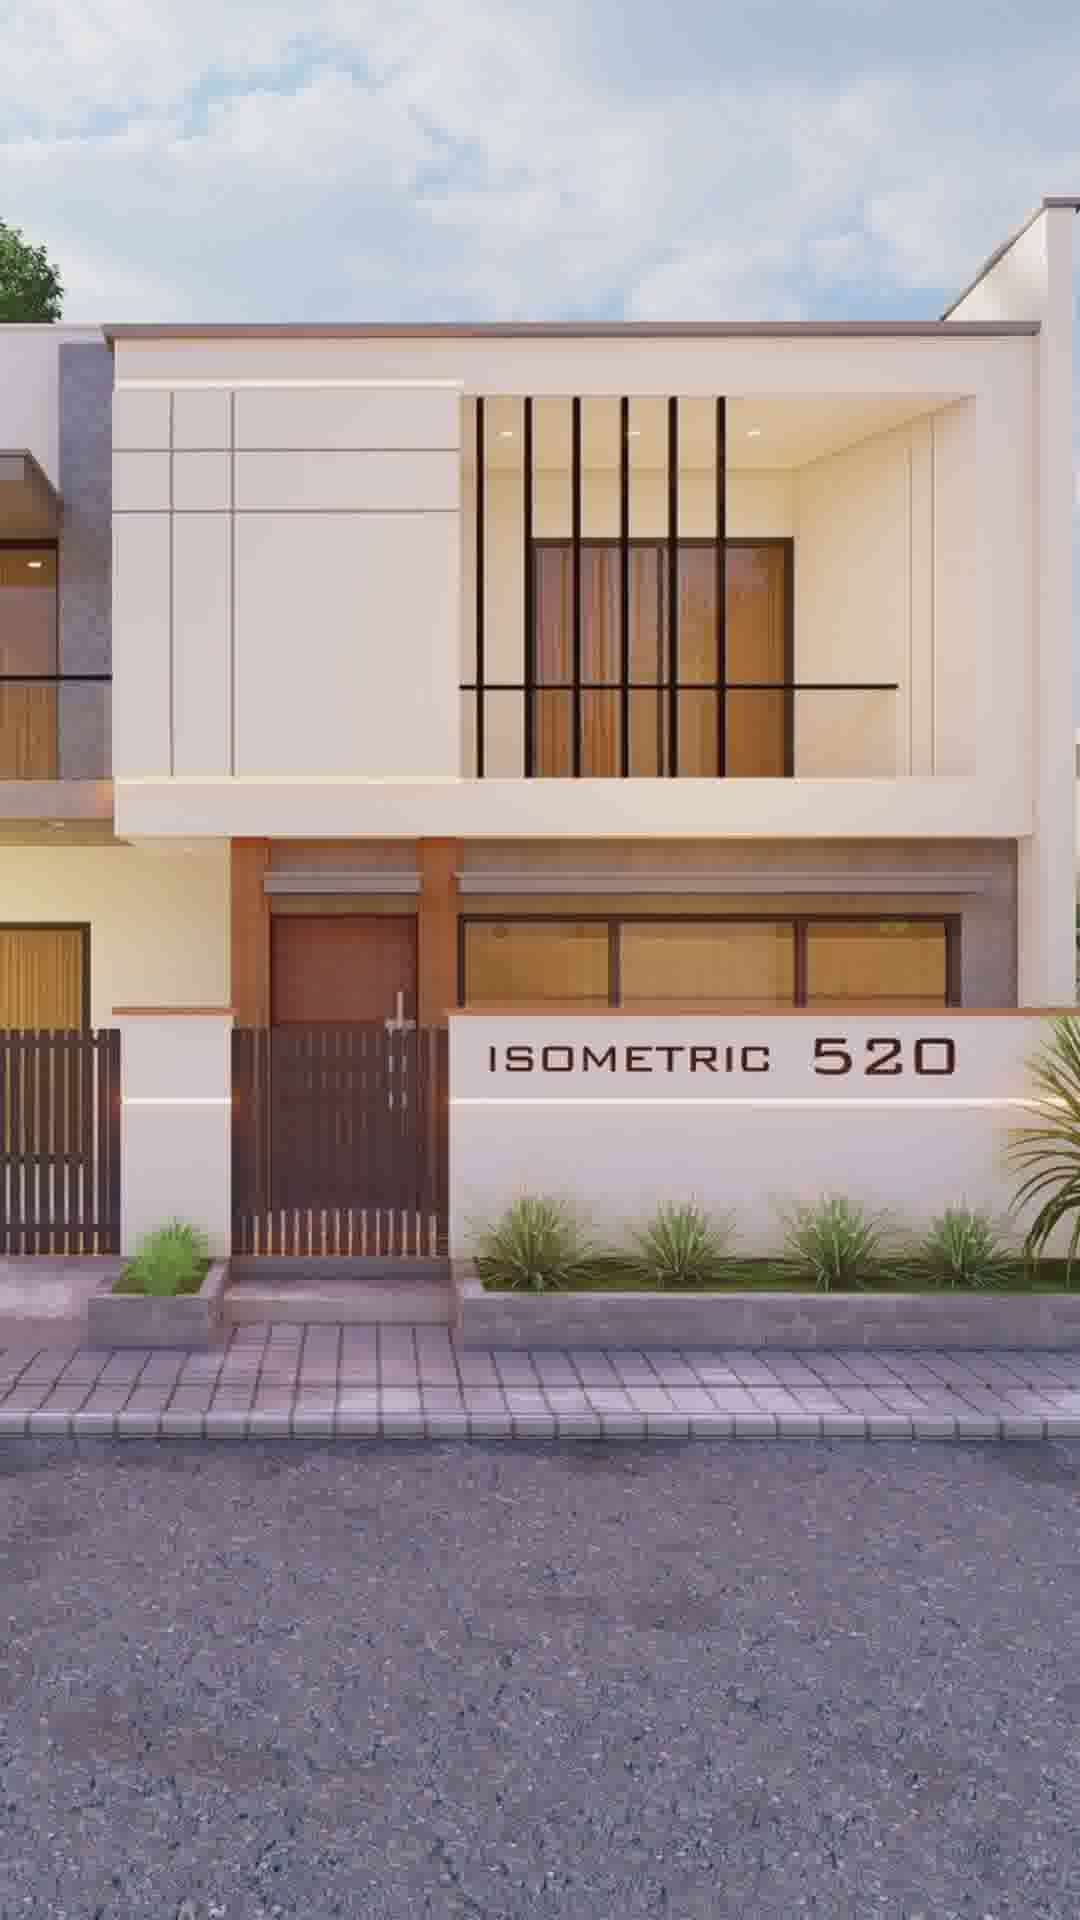 Modern House Design
Architect|3D Design|Elevation
 #Architect  #architecturedesigns  #architecturedaily  #HouseDesigns  #modernhousedesigns  #3dfrontelevation  #3ddesigns  #3d
 #ElevationHome  #homedesigner  #SmallHouse  #frontElevation